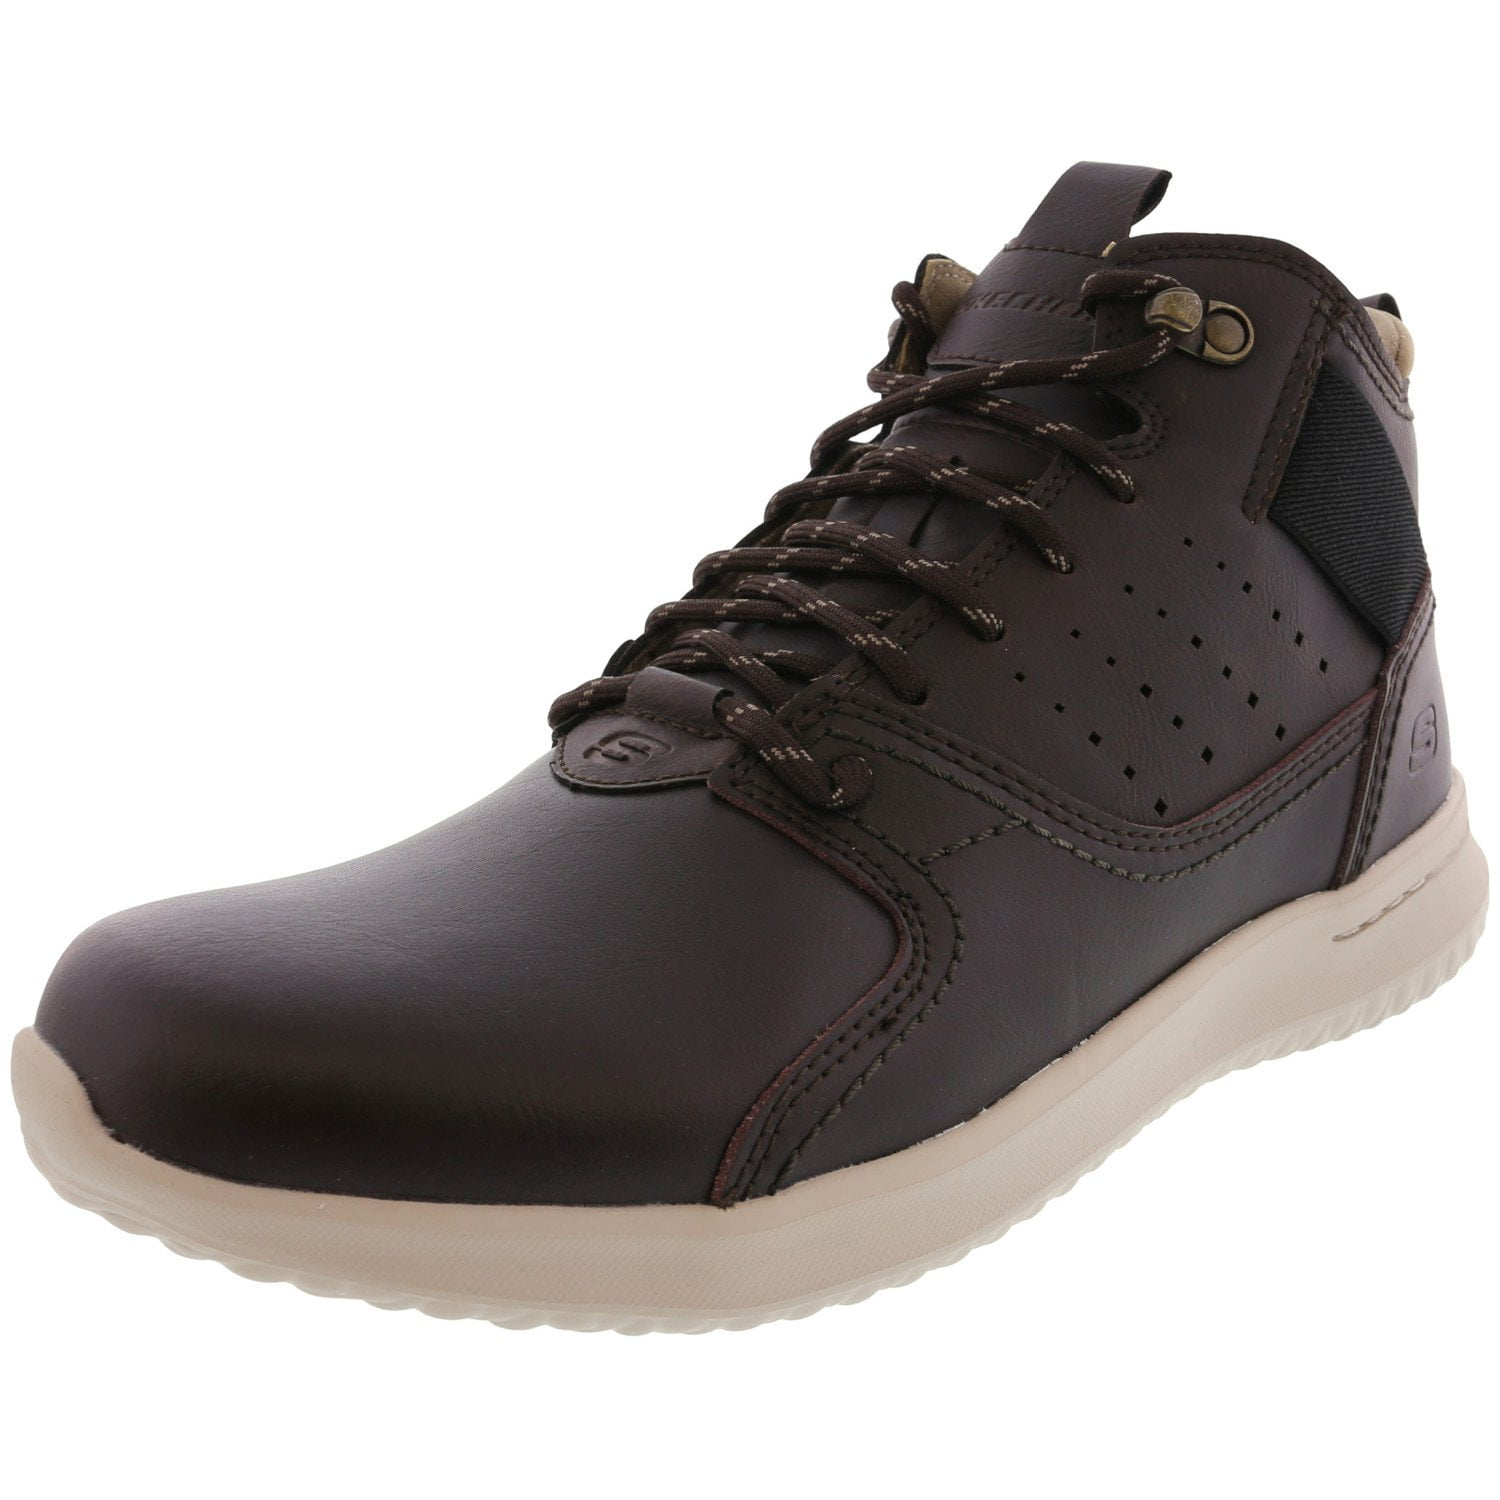 zin verwerken Platteland Skechers Men's Delson - Venego Chocolate High-Top Leather Fashion Sneaker  8M | Walmart Canada